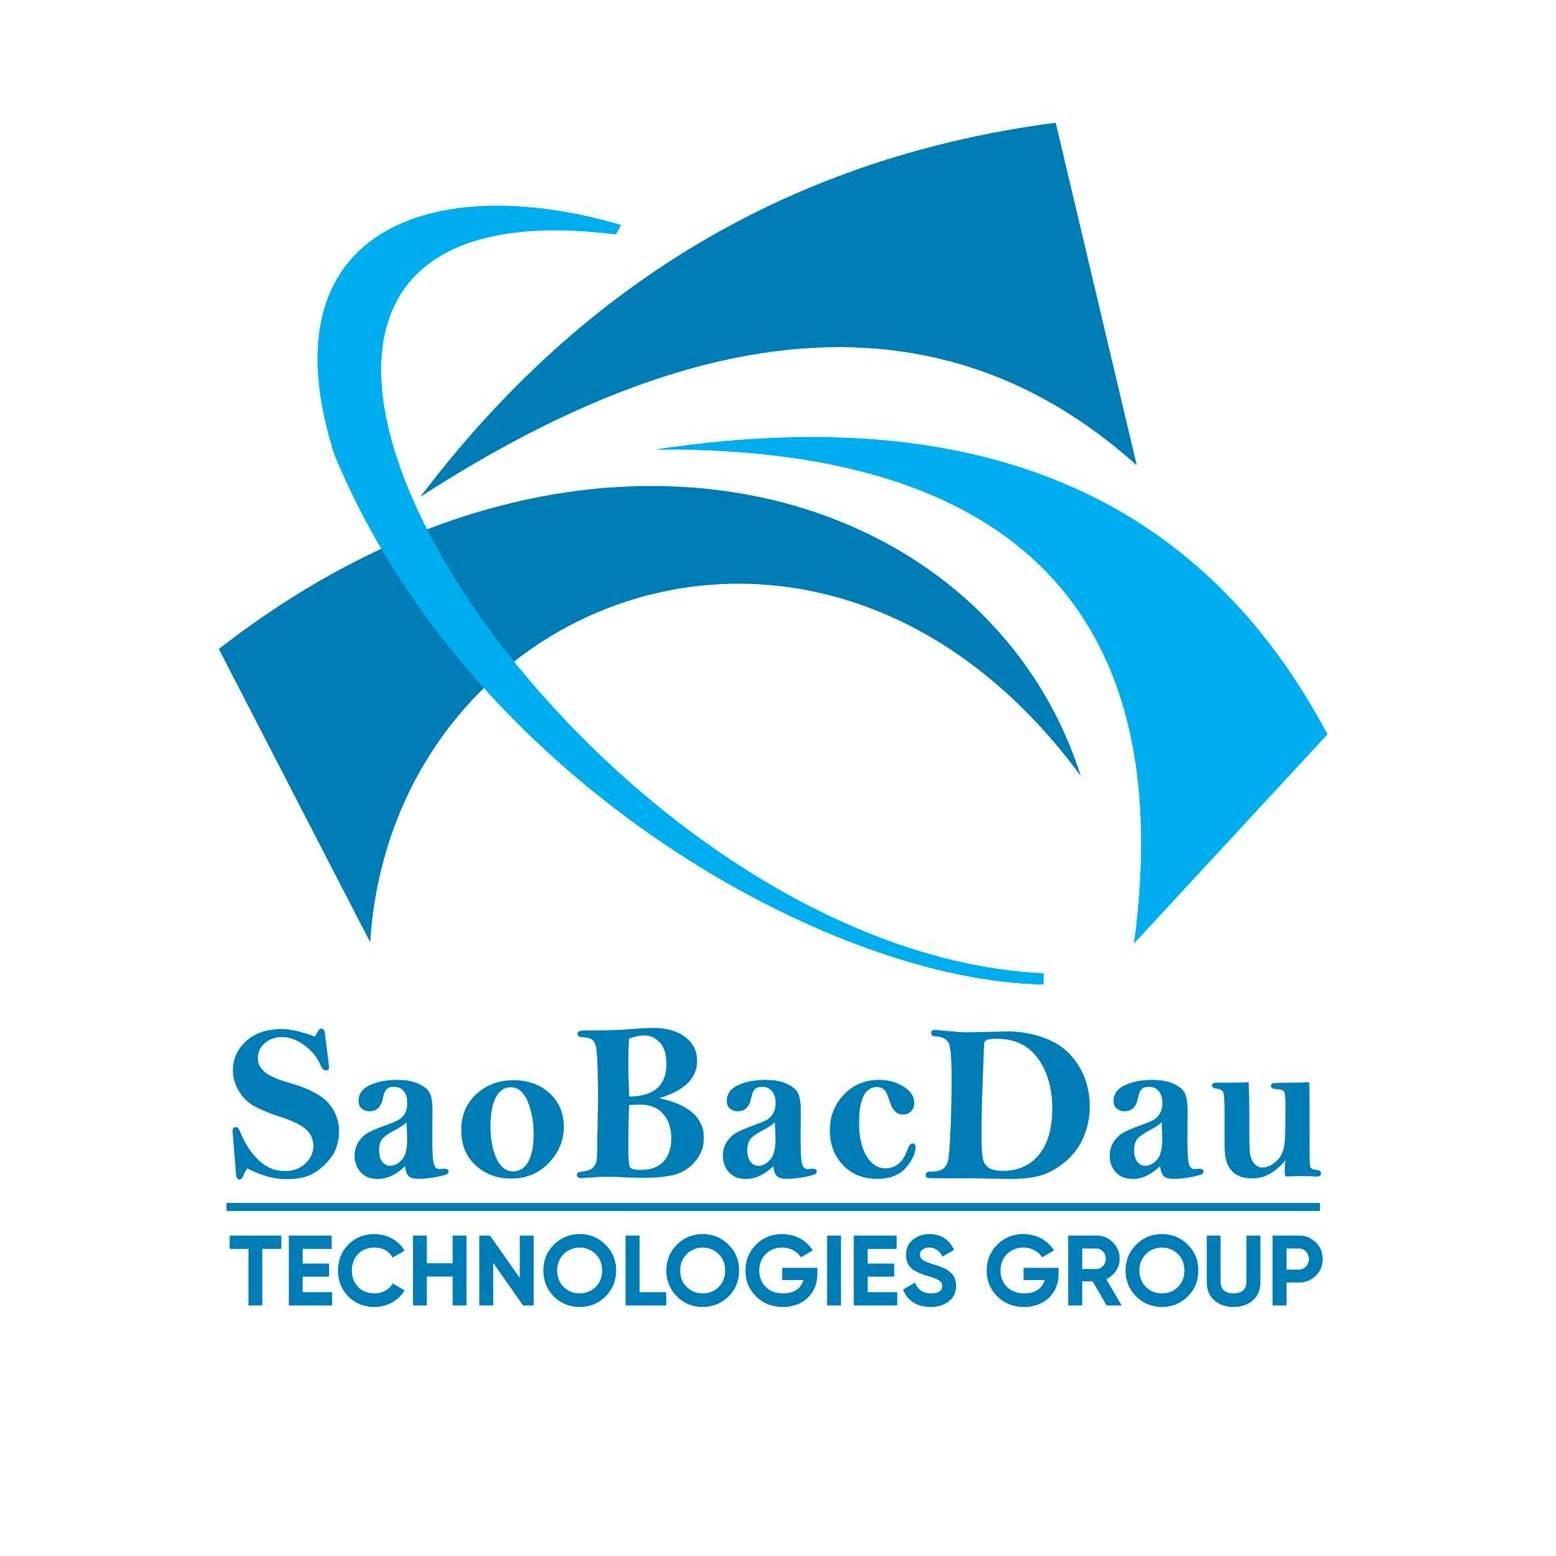 SaoBacDau Technologies